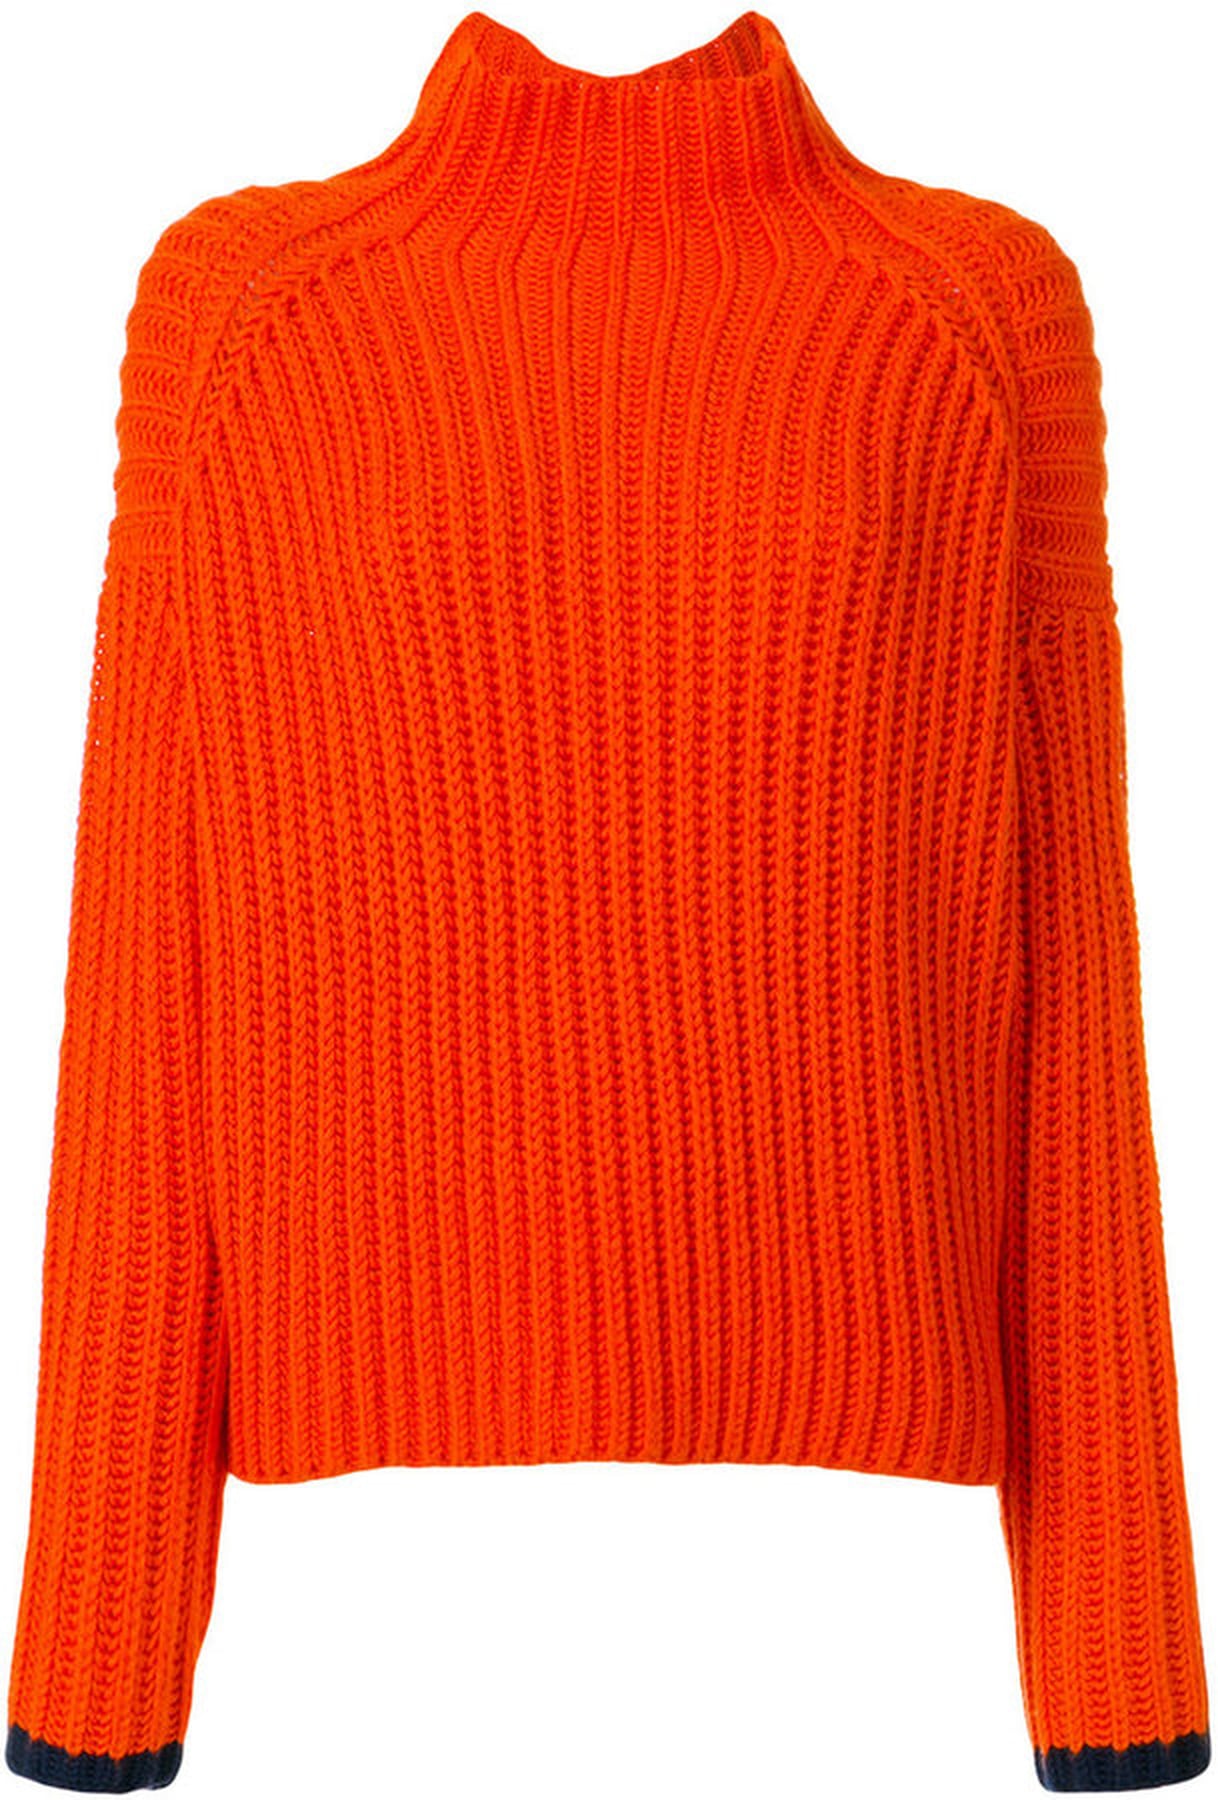 Selena Gomez's Orange Sweater and Red Skirt | POPSUGAR Fashion